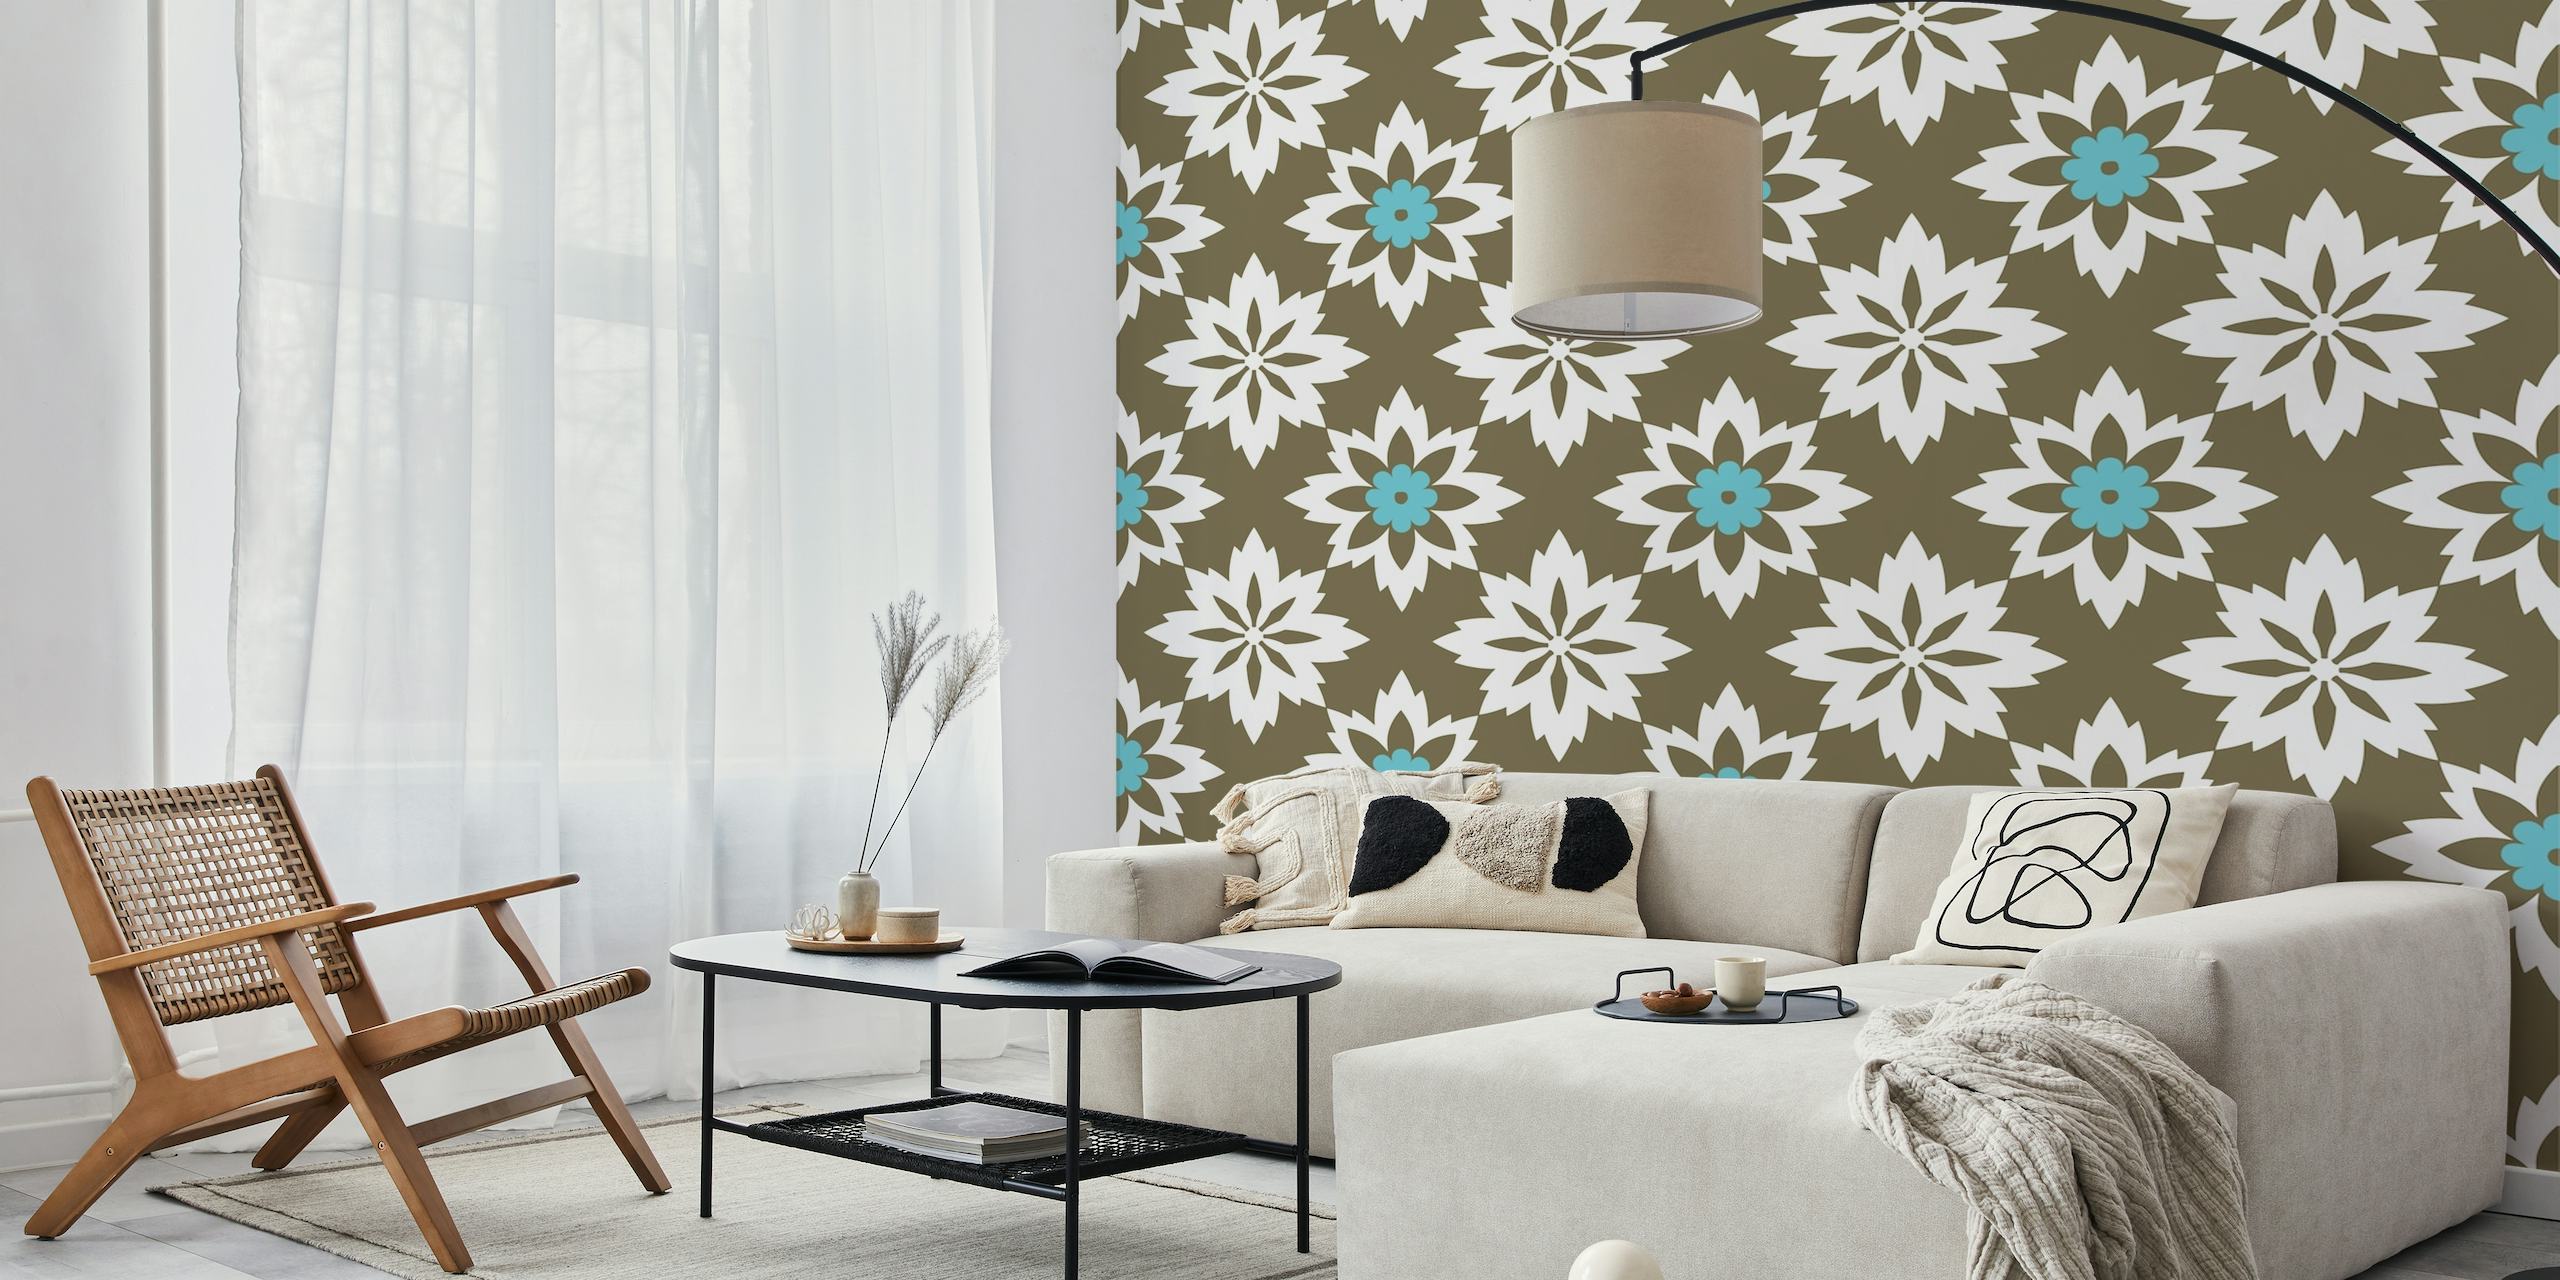 Moorish Floral Ornament in Brown Teal Blue wallpaper